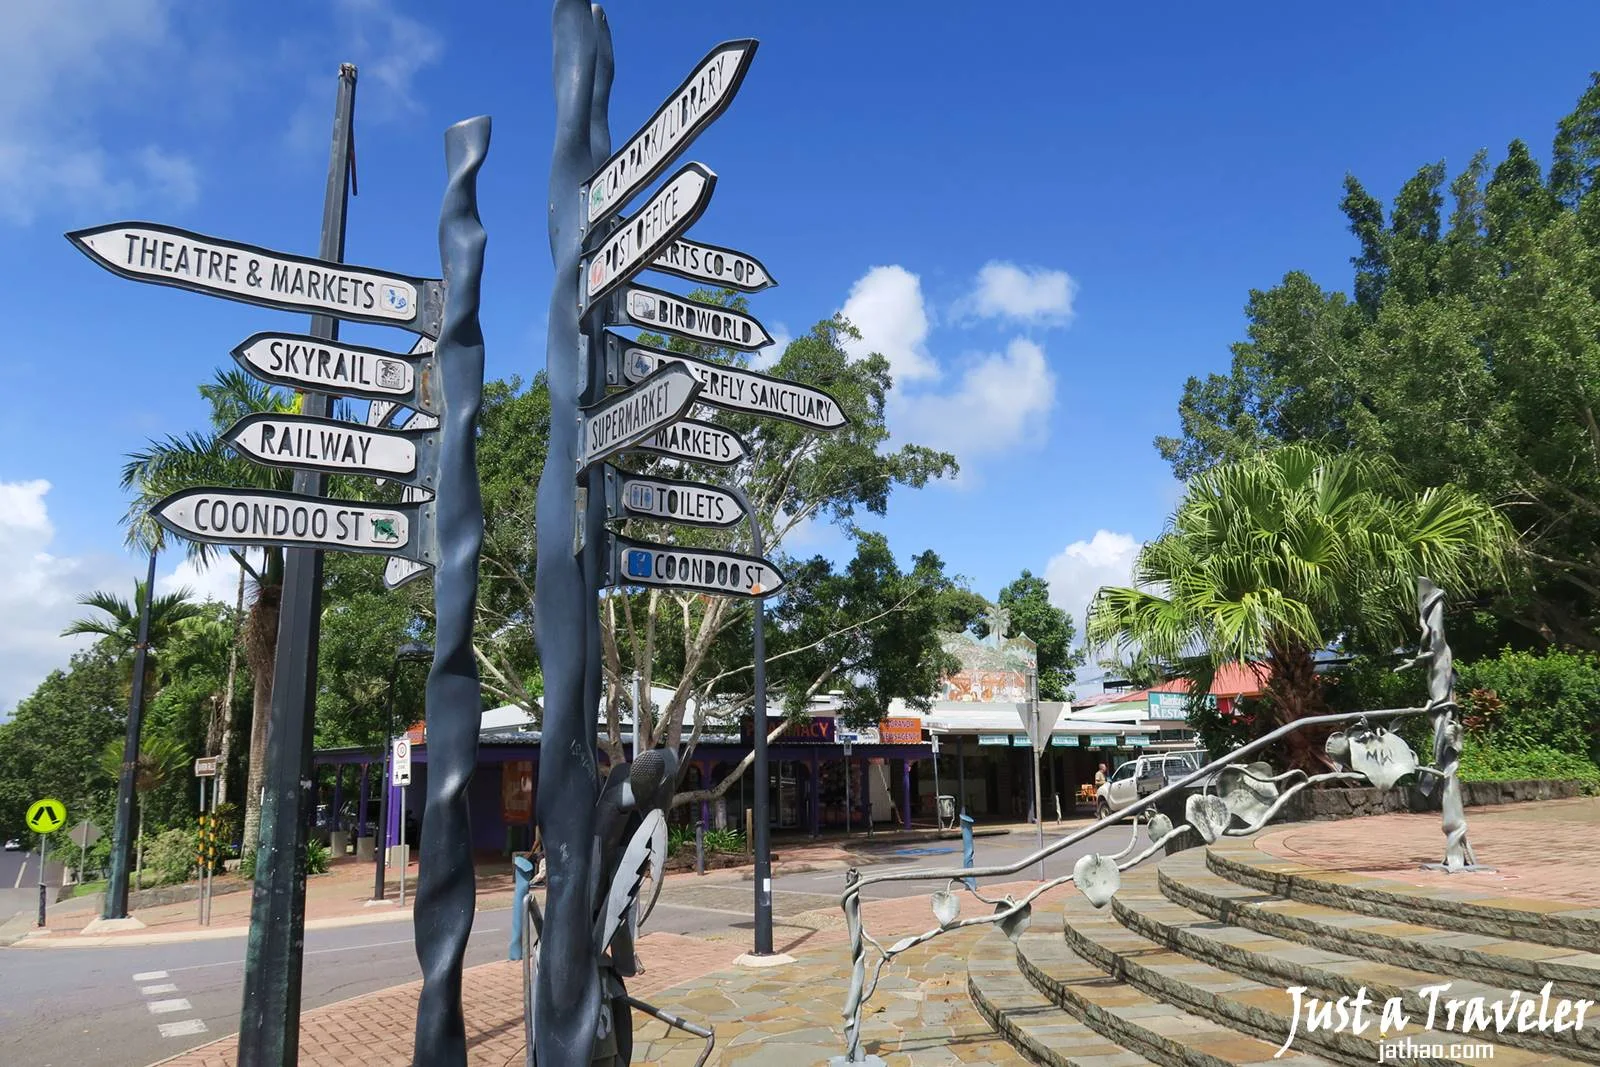 凱恩斯-庫蘭達-景點-庫蘭達市集-自由行-旅遊-澳洲-Cairns-Kuranda-Market-Travel-Tourist-Attraction-Australia